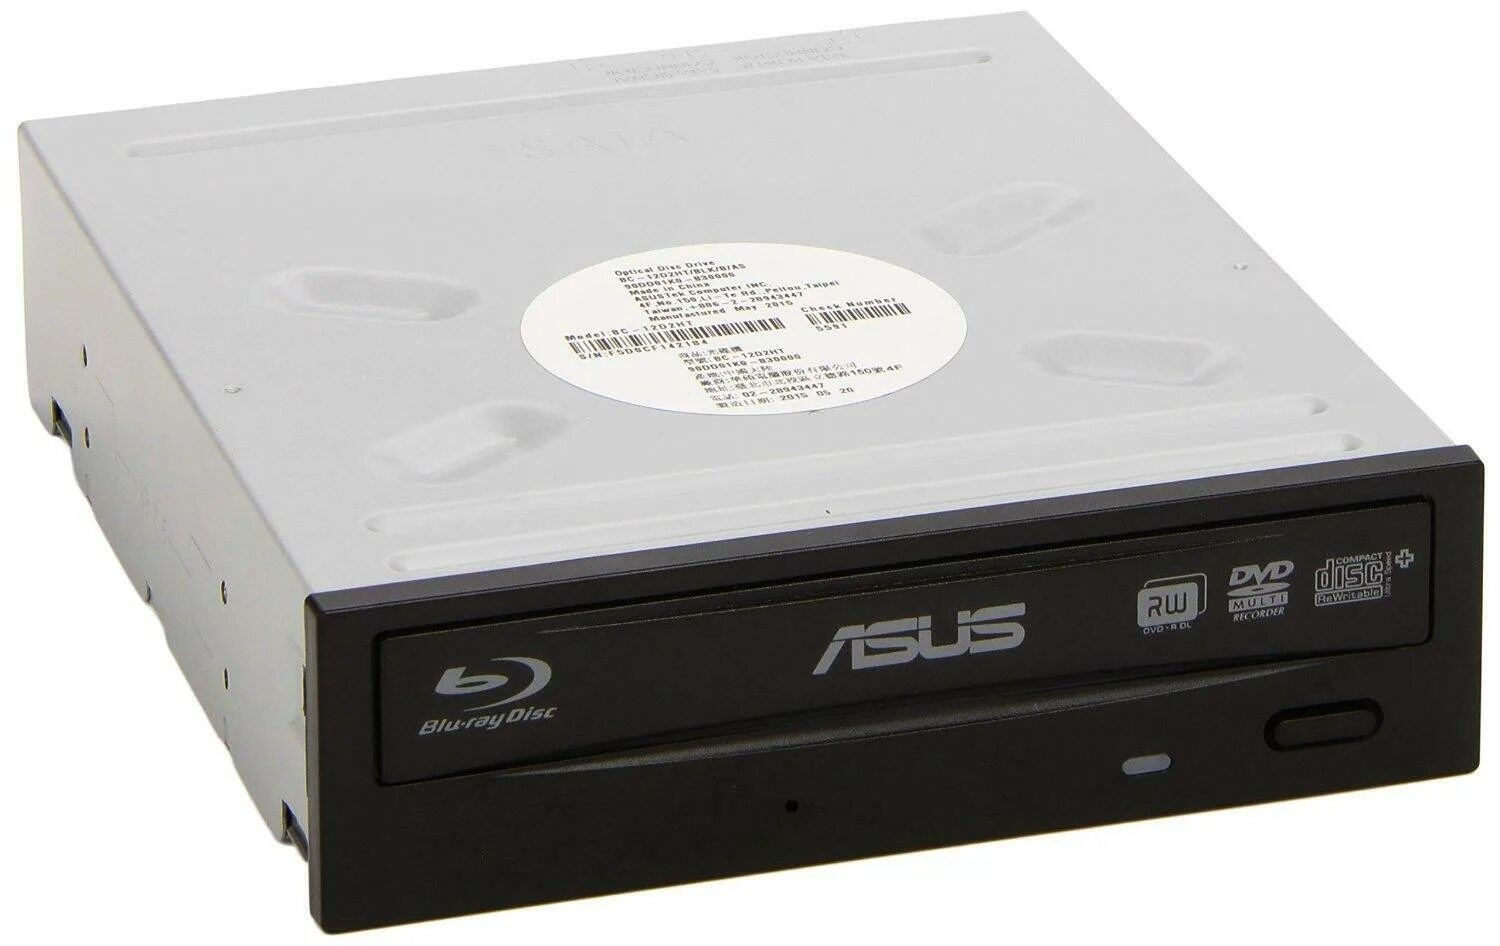 Оптический привод Blu-ray ASUS BC-12d2ht (BC-12d2ht/BLK/B/as). Привод SATA DVD±ROM LG (dh18ns61). CD DVD RW привод ASUS. Привод Blu-ray ASUS BC-12d2ht оптические Pioneer DVR xu01t. Cd dvd привод купить